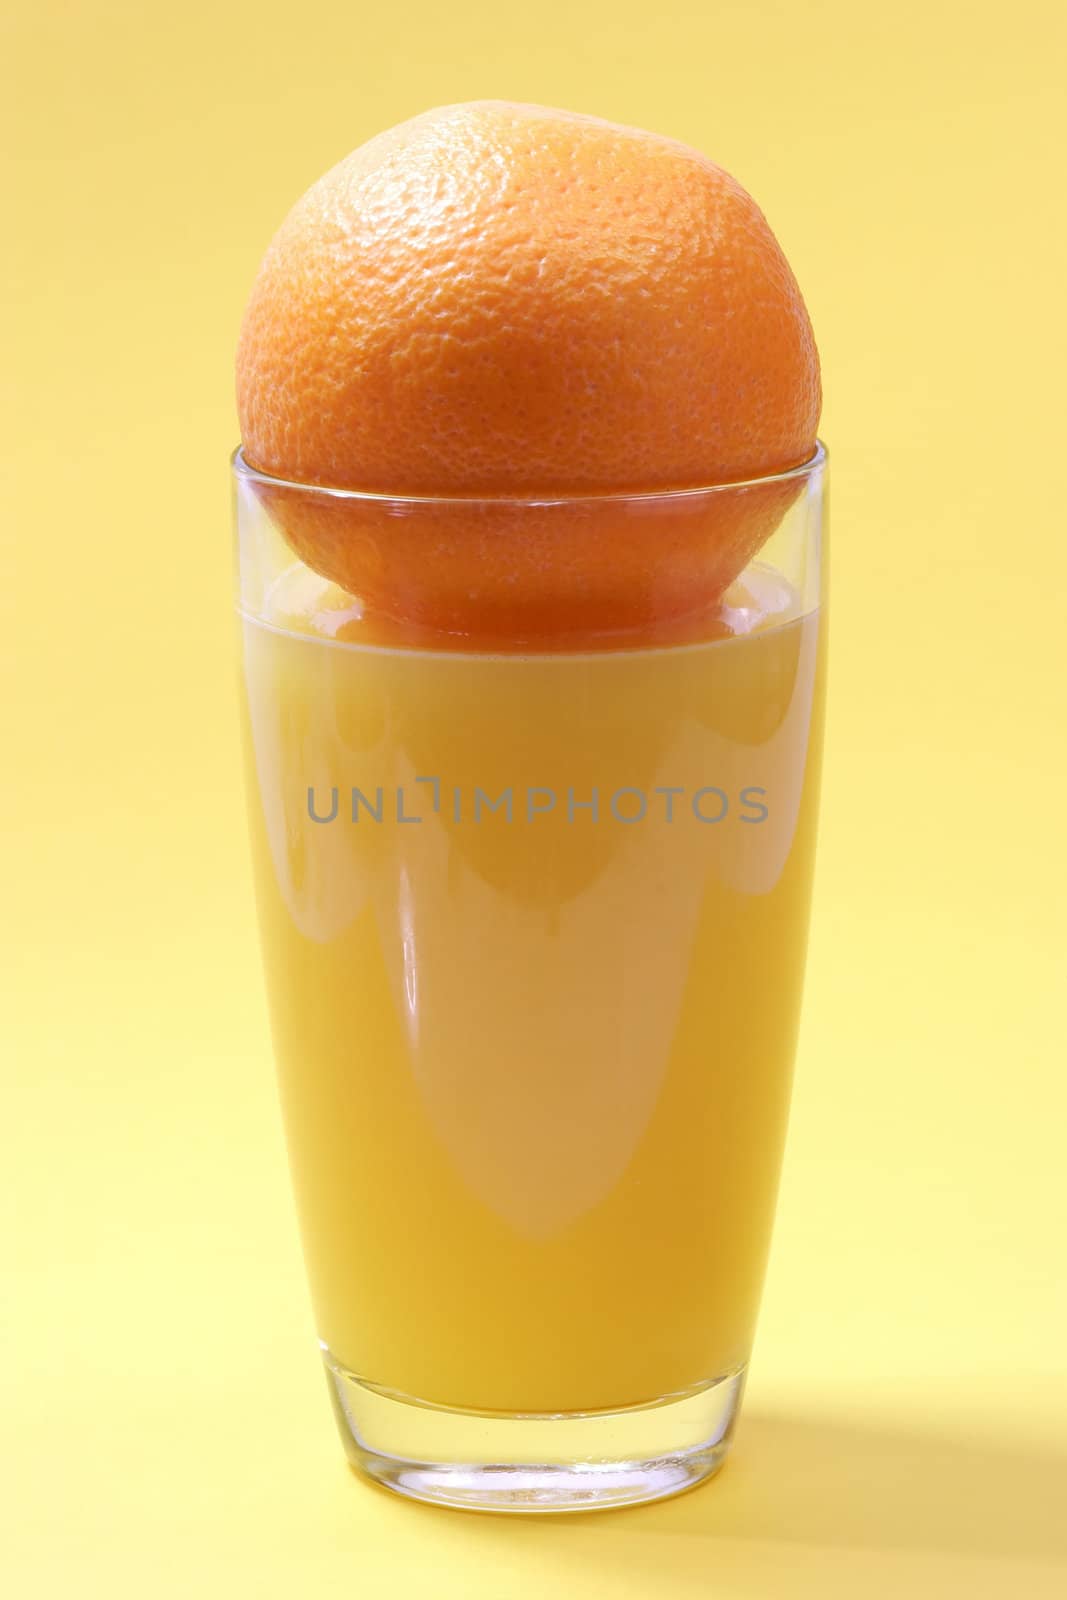 Orange juice on bright background